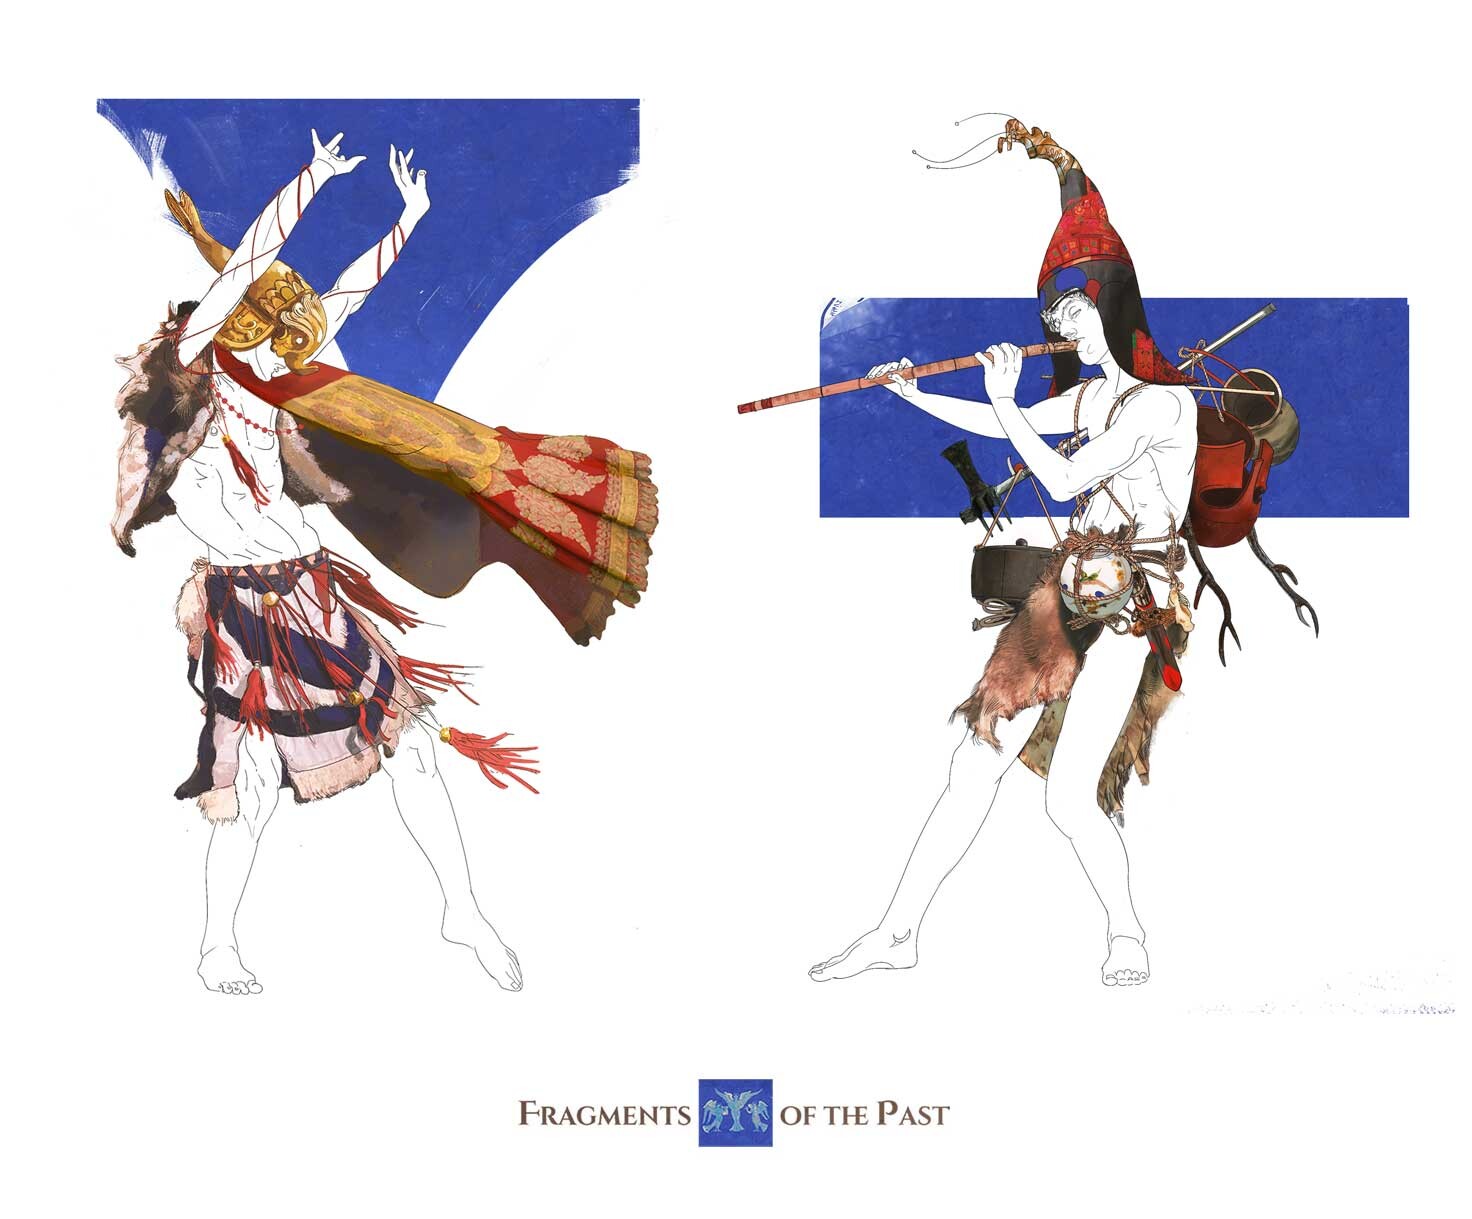 Helenos and Phrissos, a dancer and a flutist of the western coast of Askedoria